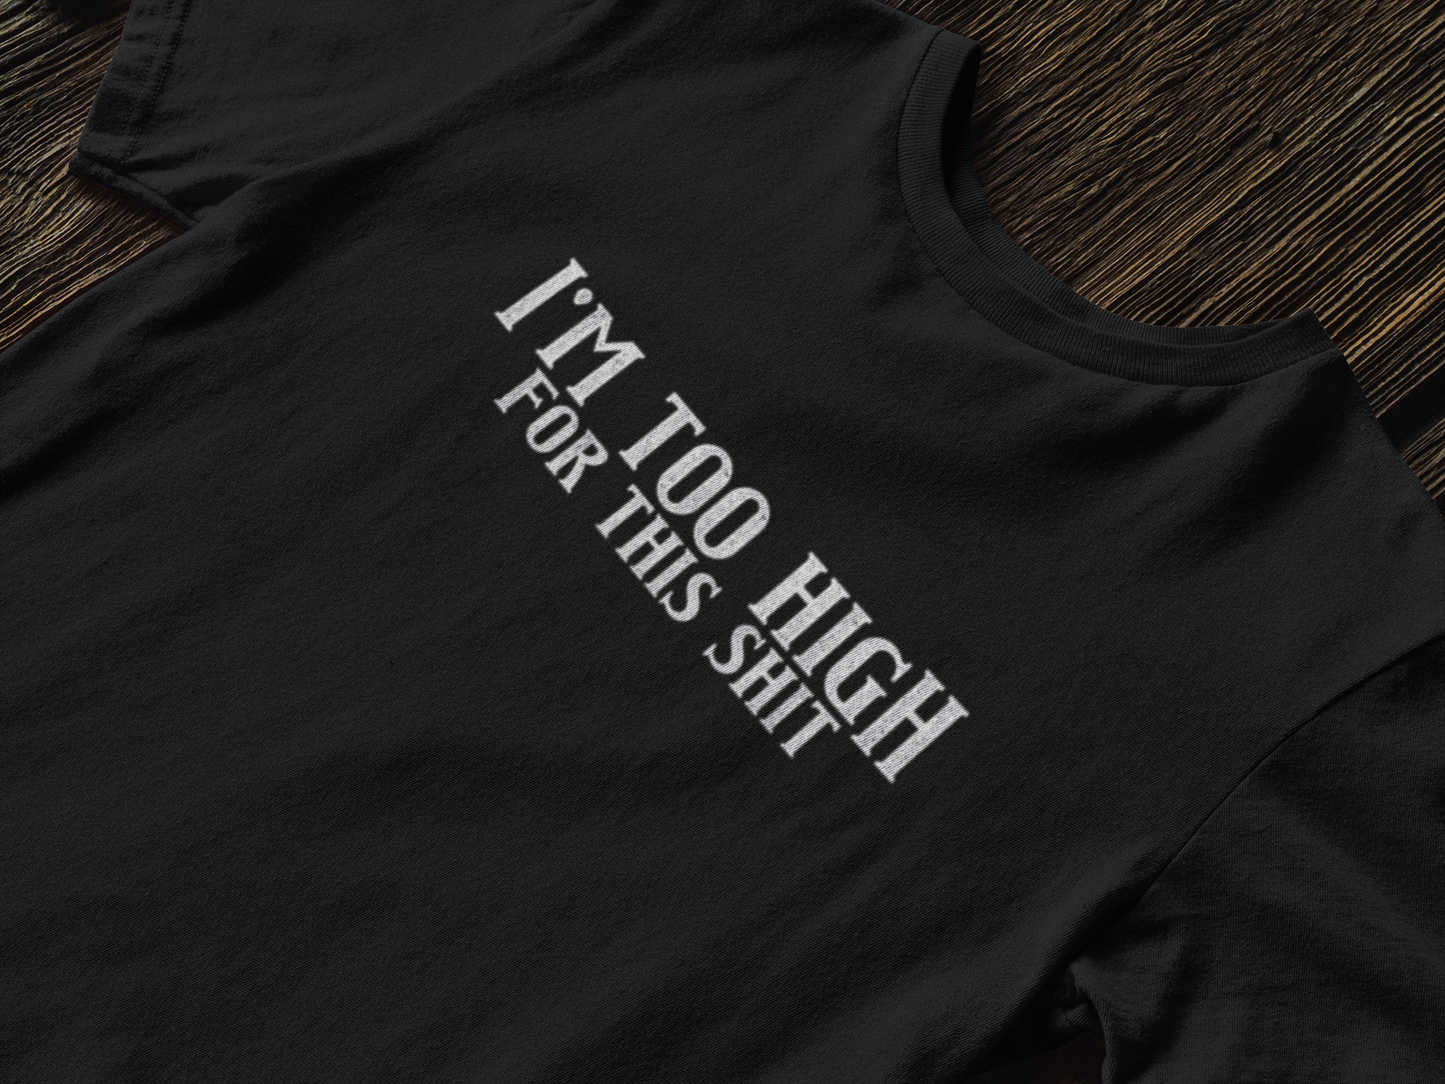 I'm Too High T-shirt